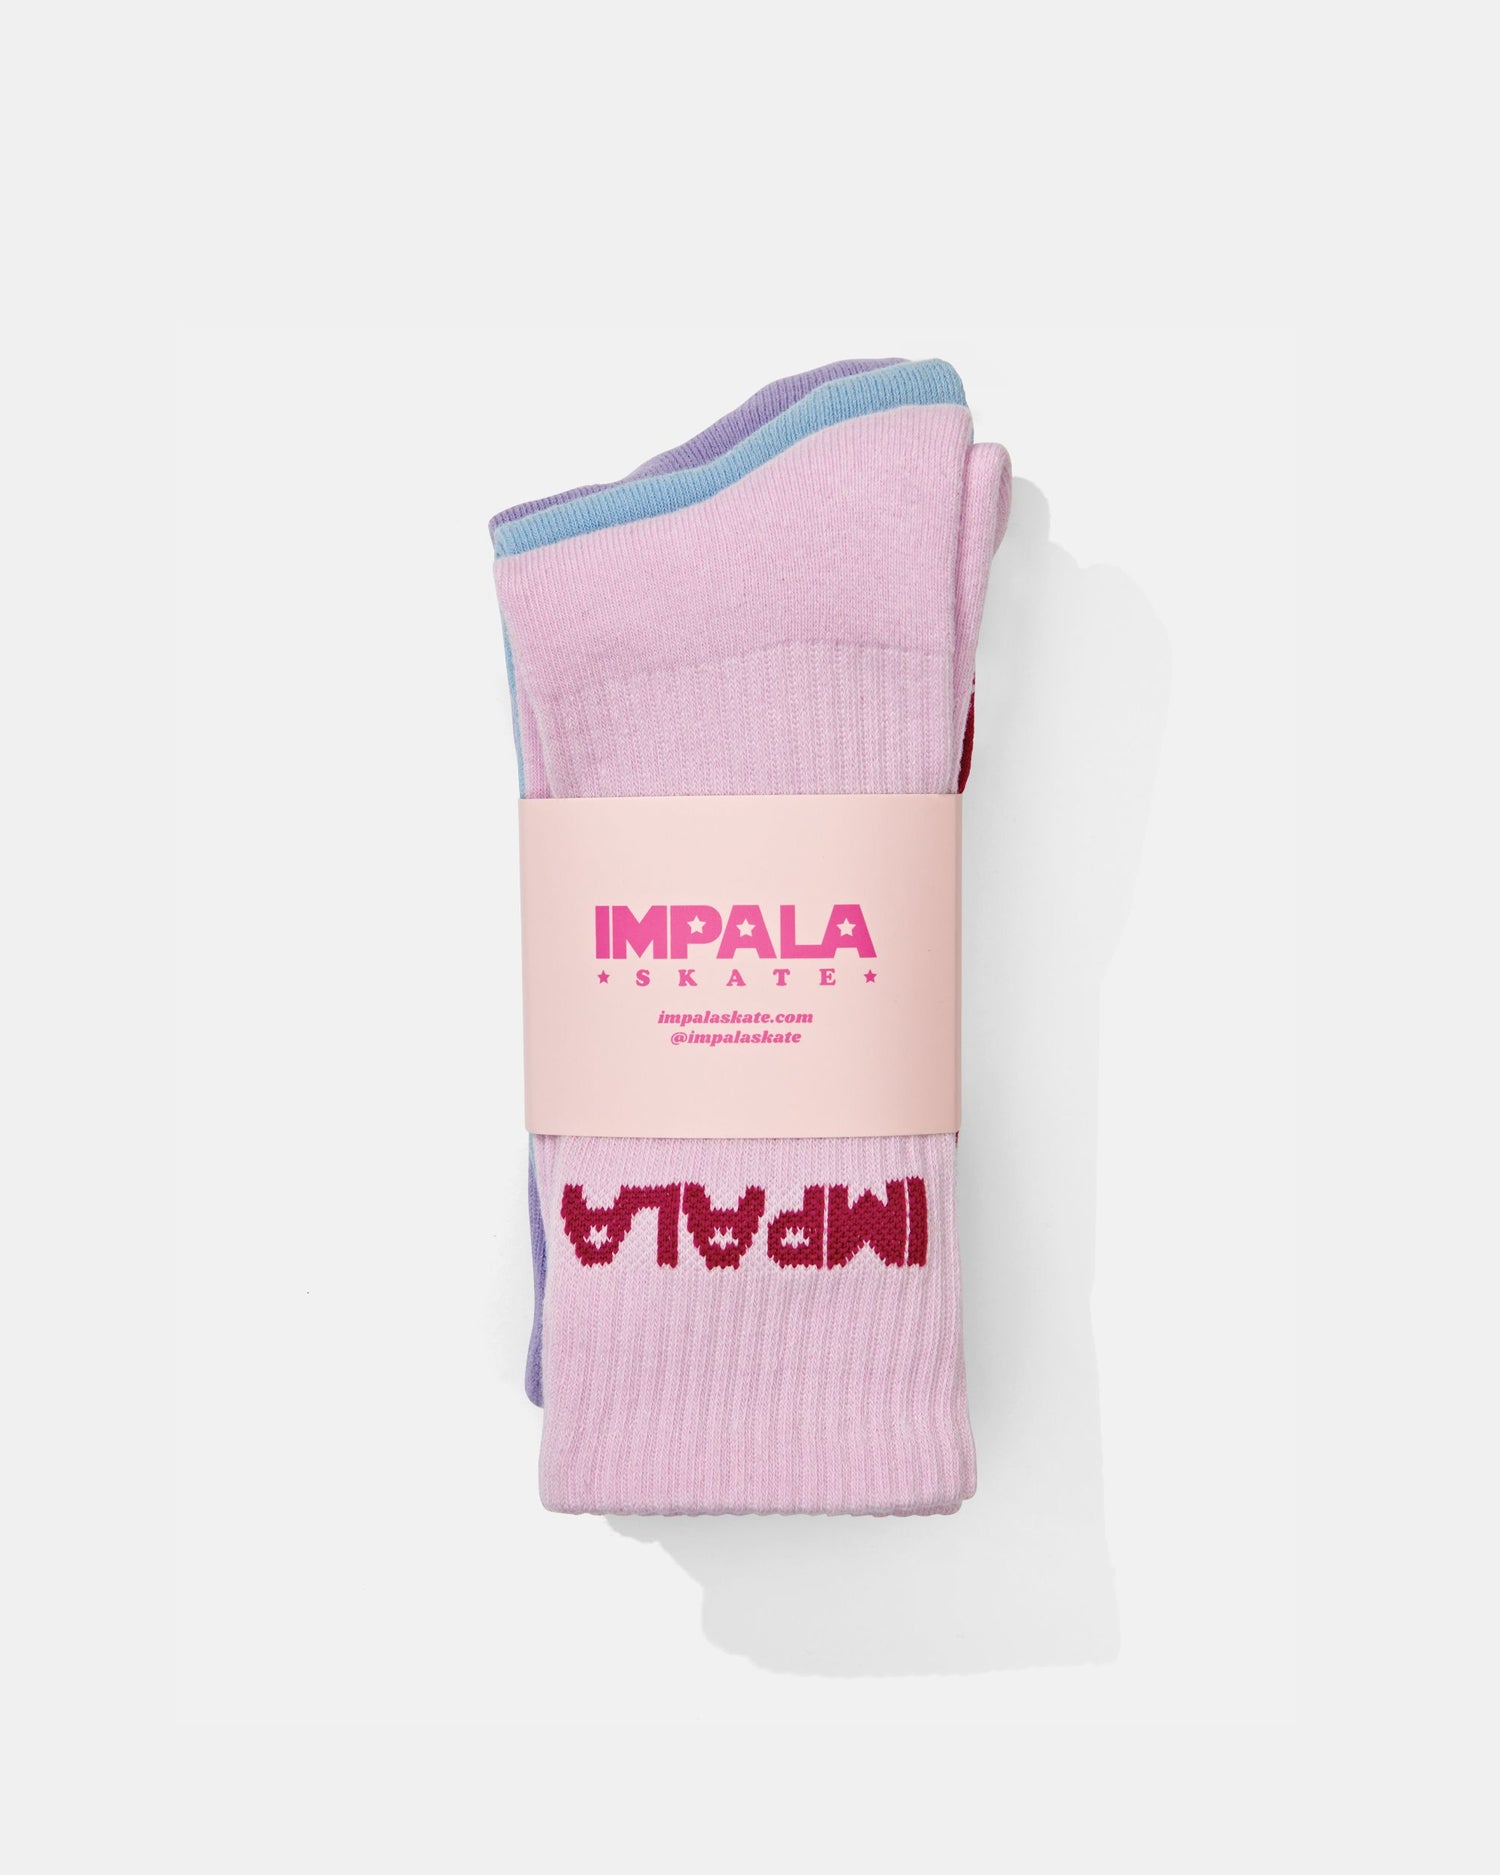 packaged 3 pack of Pastel Impala Skate Socks